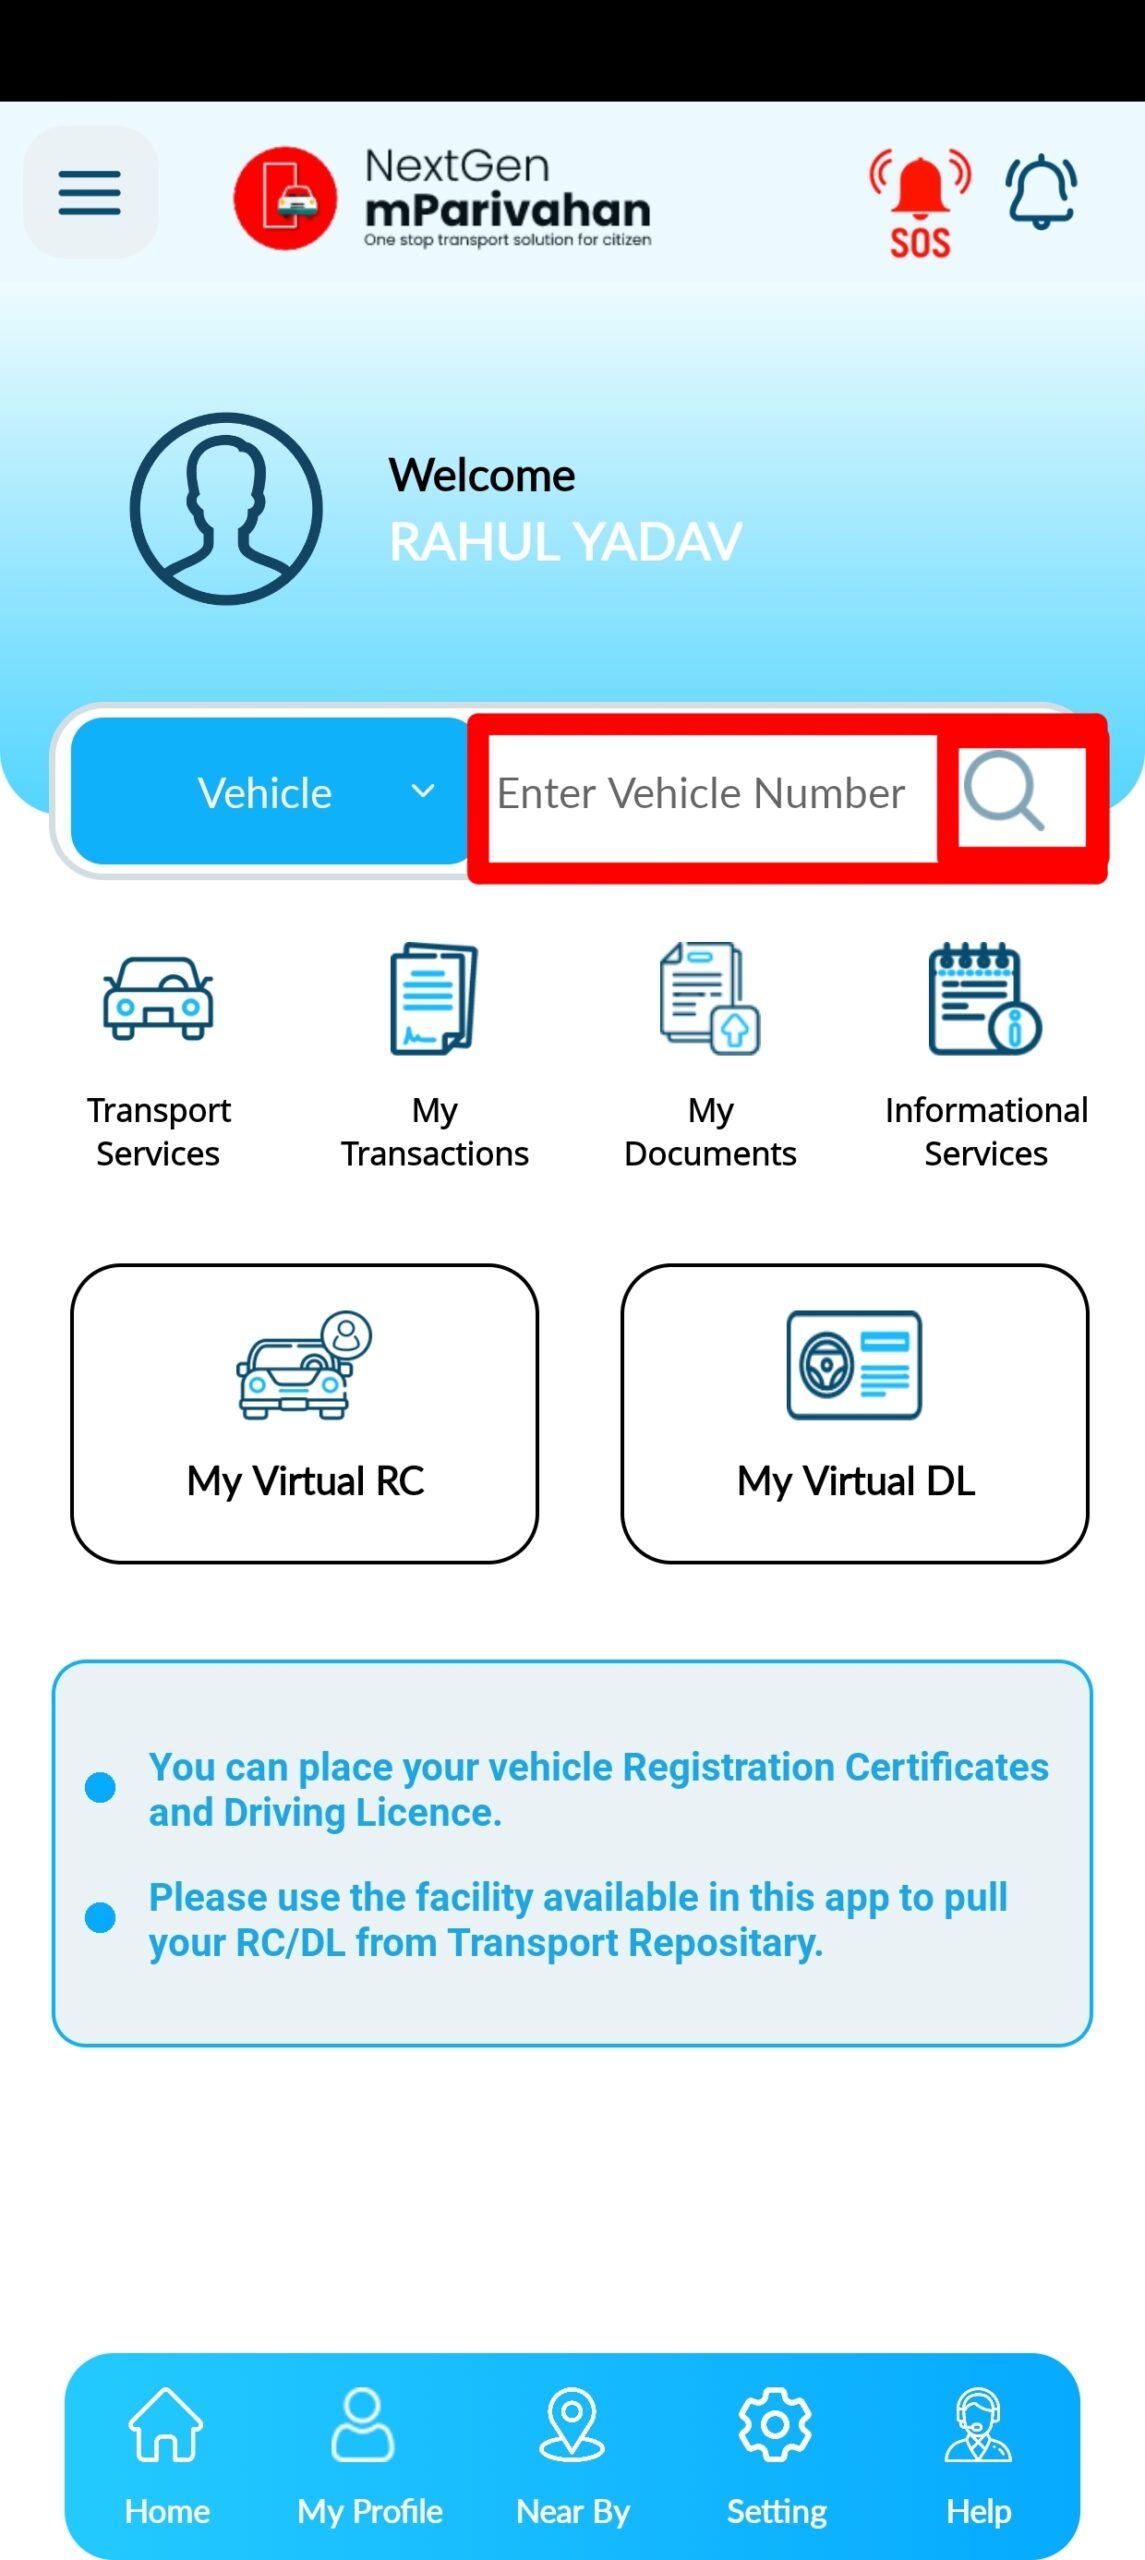 mParivahan Vehicle Details